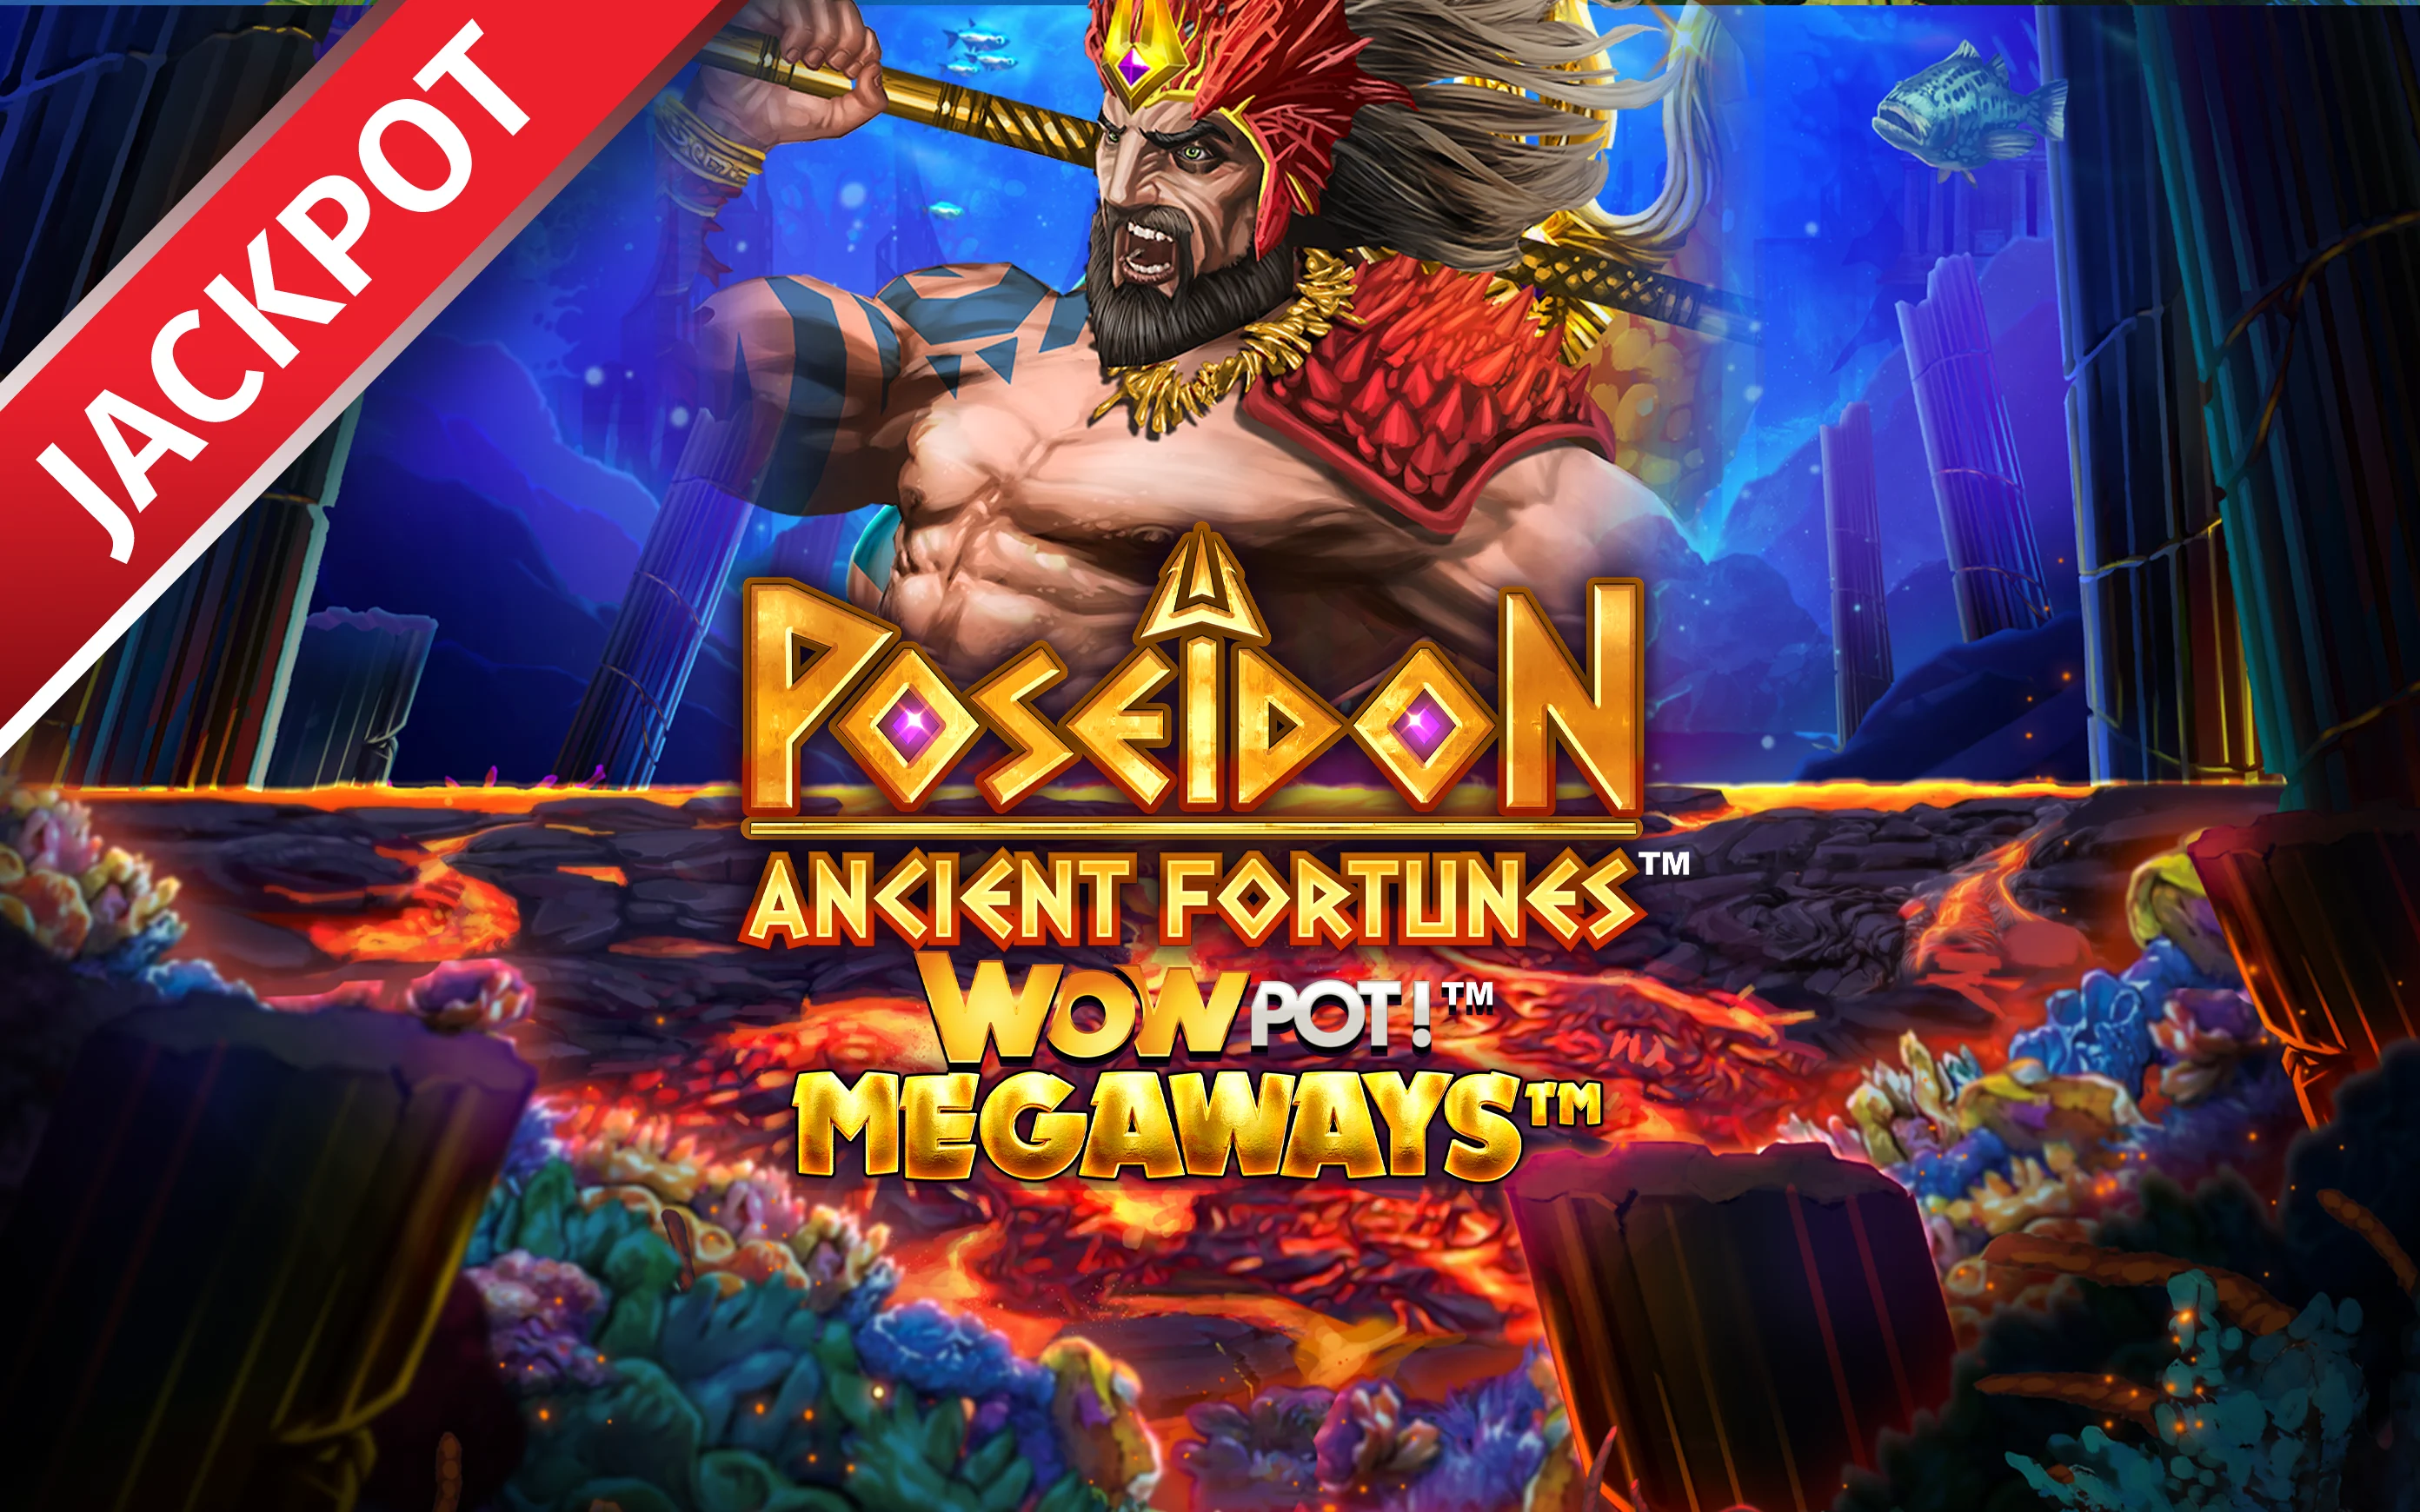 Play Ancient Fortunes: Poseidon™ WowPot! MEGAWAYS™ on Starcasino.be online casino